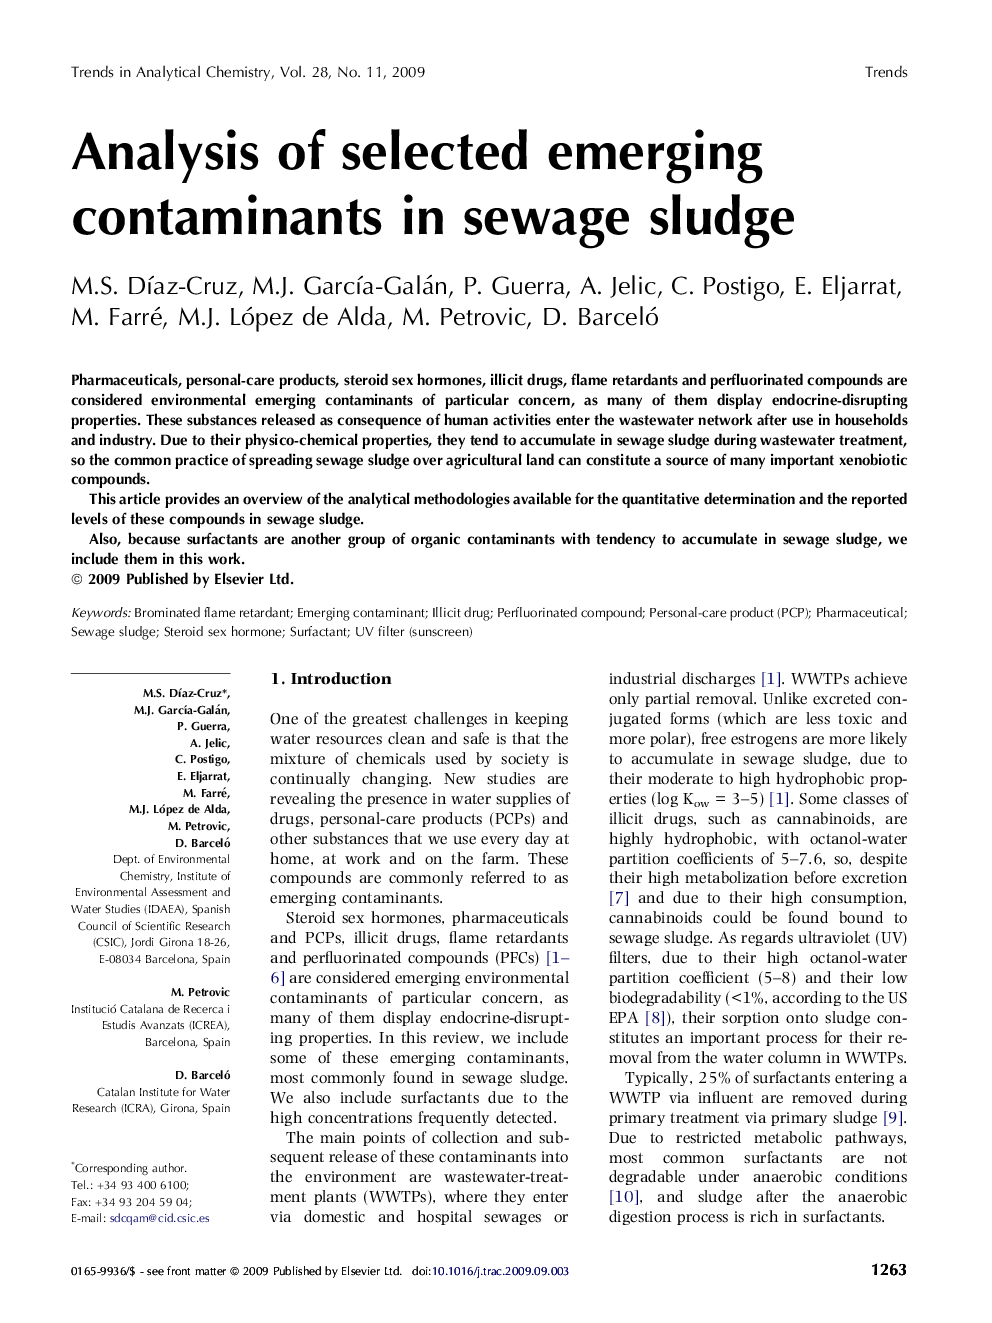 Analysis of selected emerging contaminants in sewage sludge